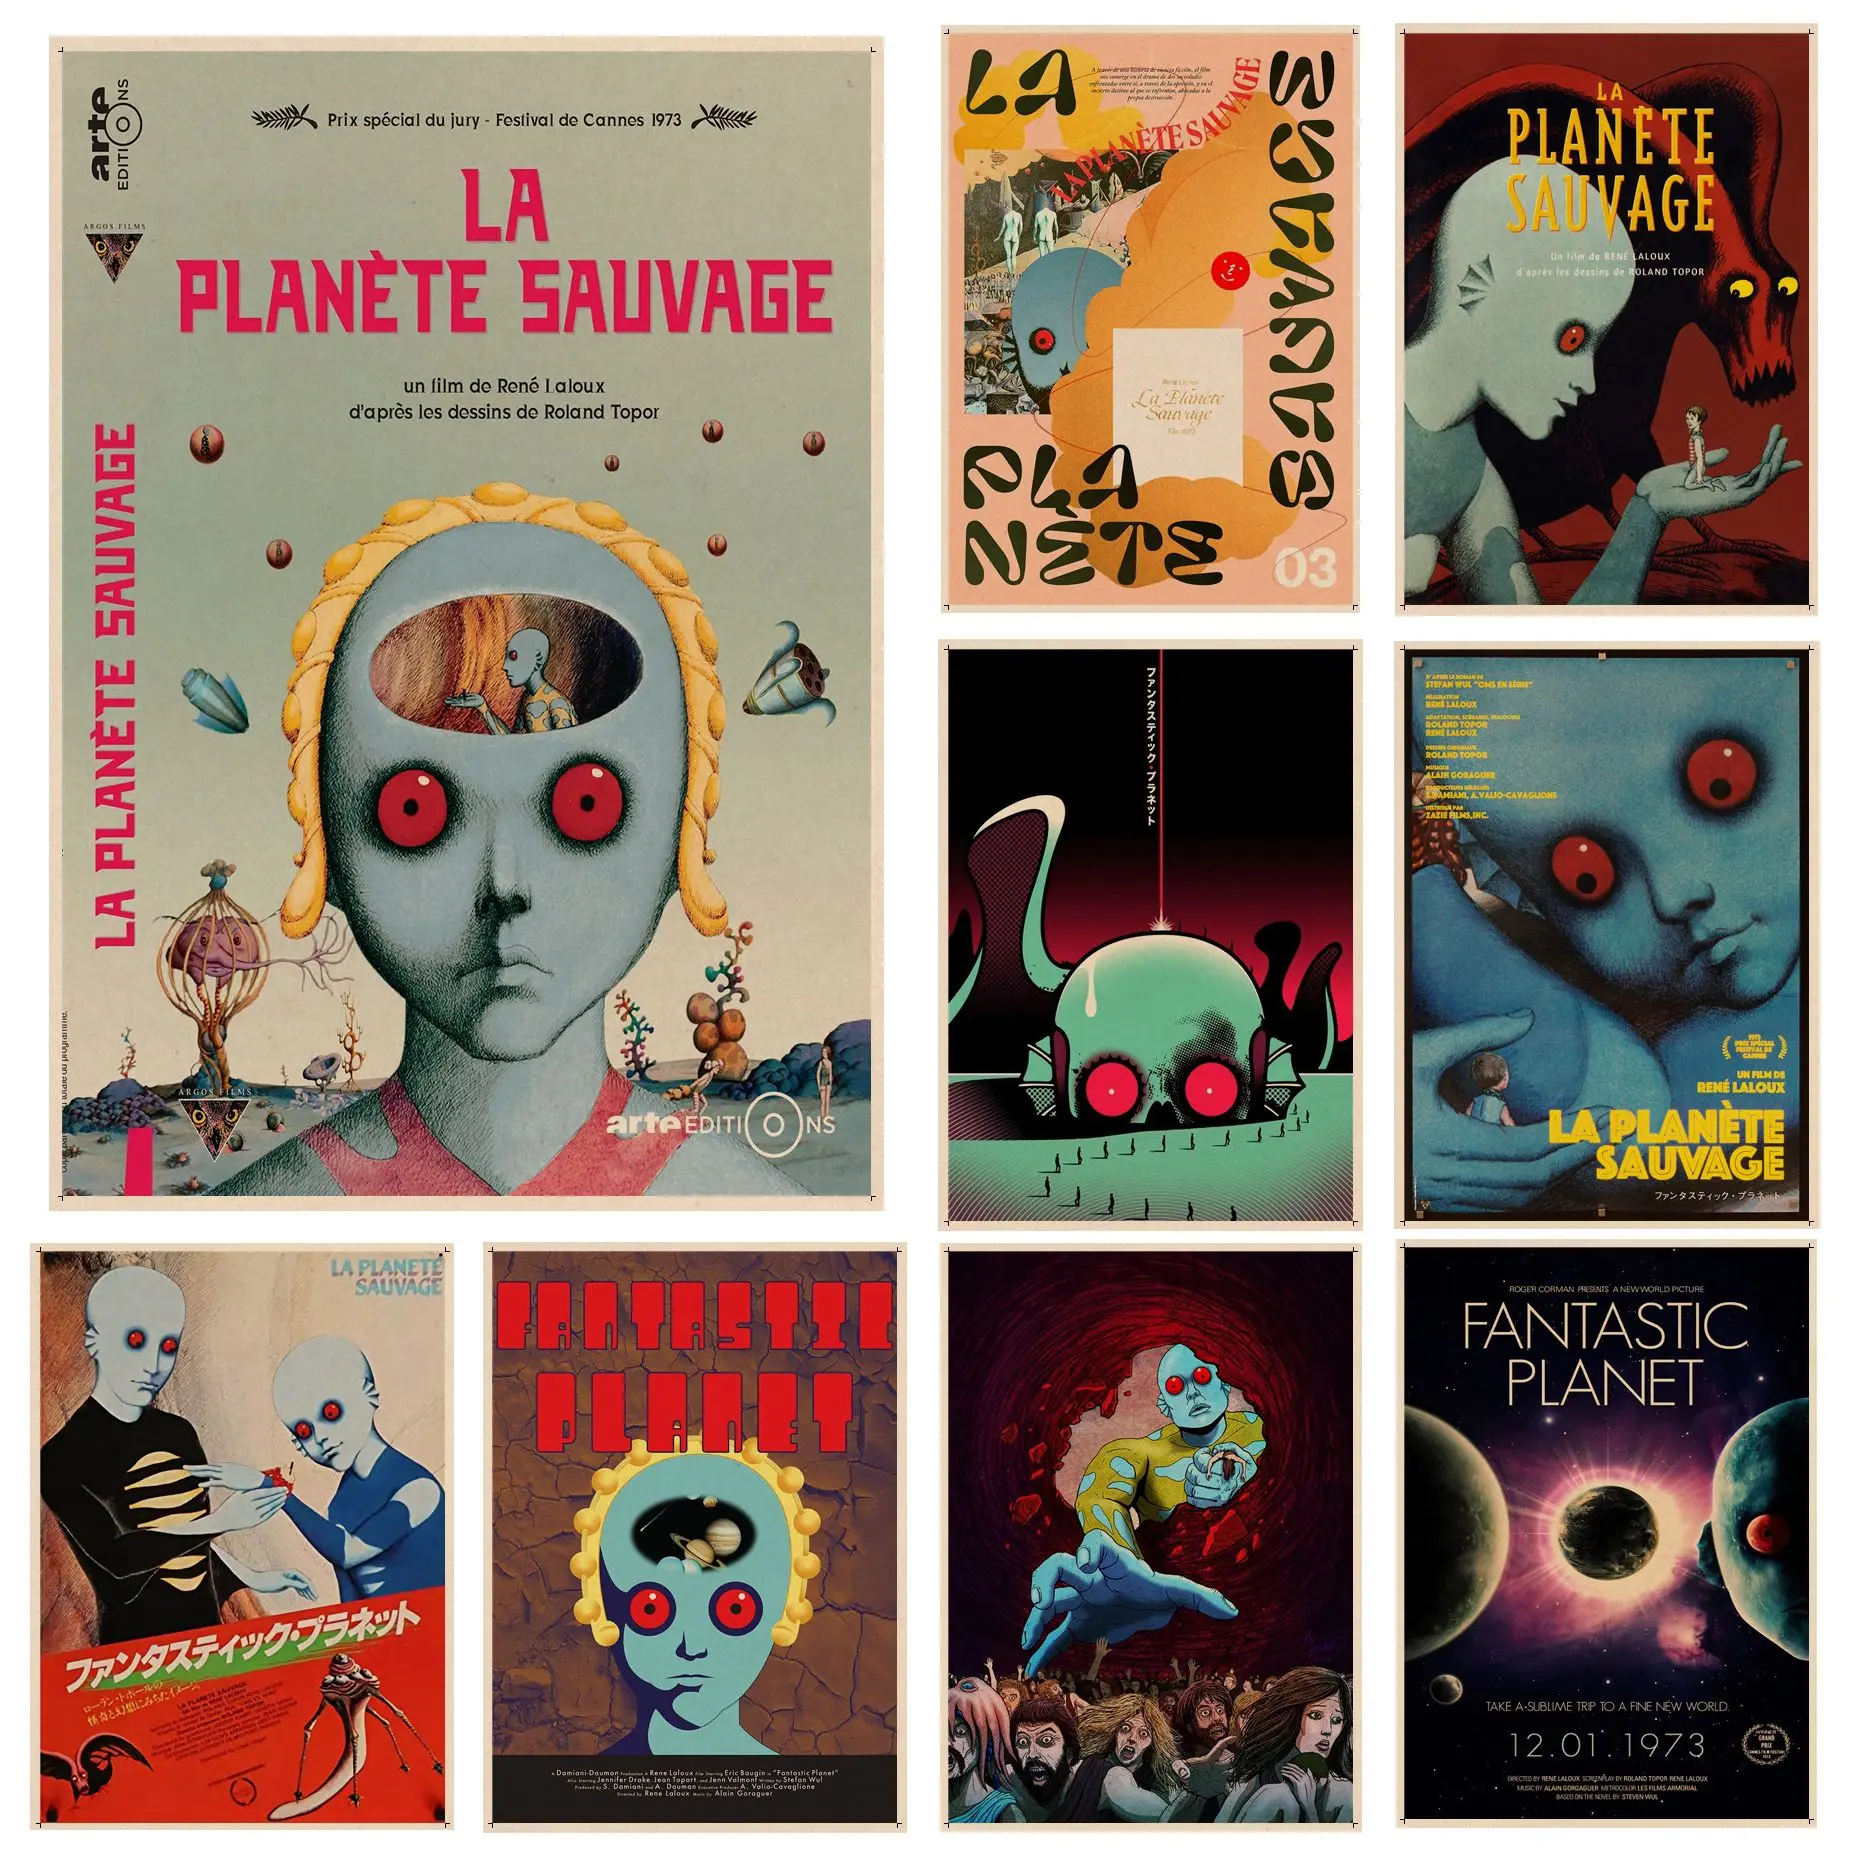 

Fantastic Planet La Planete Sauvage Sci-Fi Classic Movie Art Classic Movie Whitepaper Prints Posters Artwork Wall Stickers